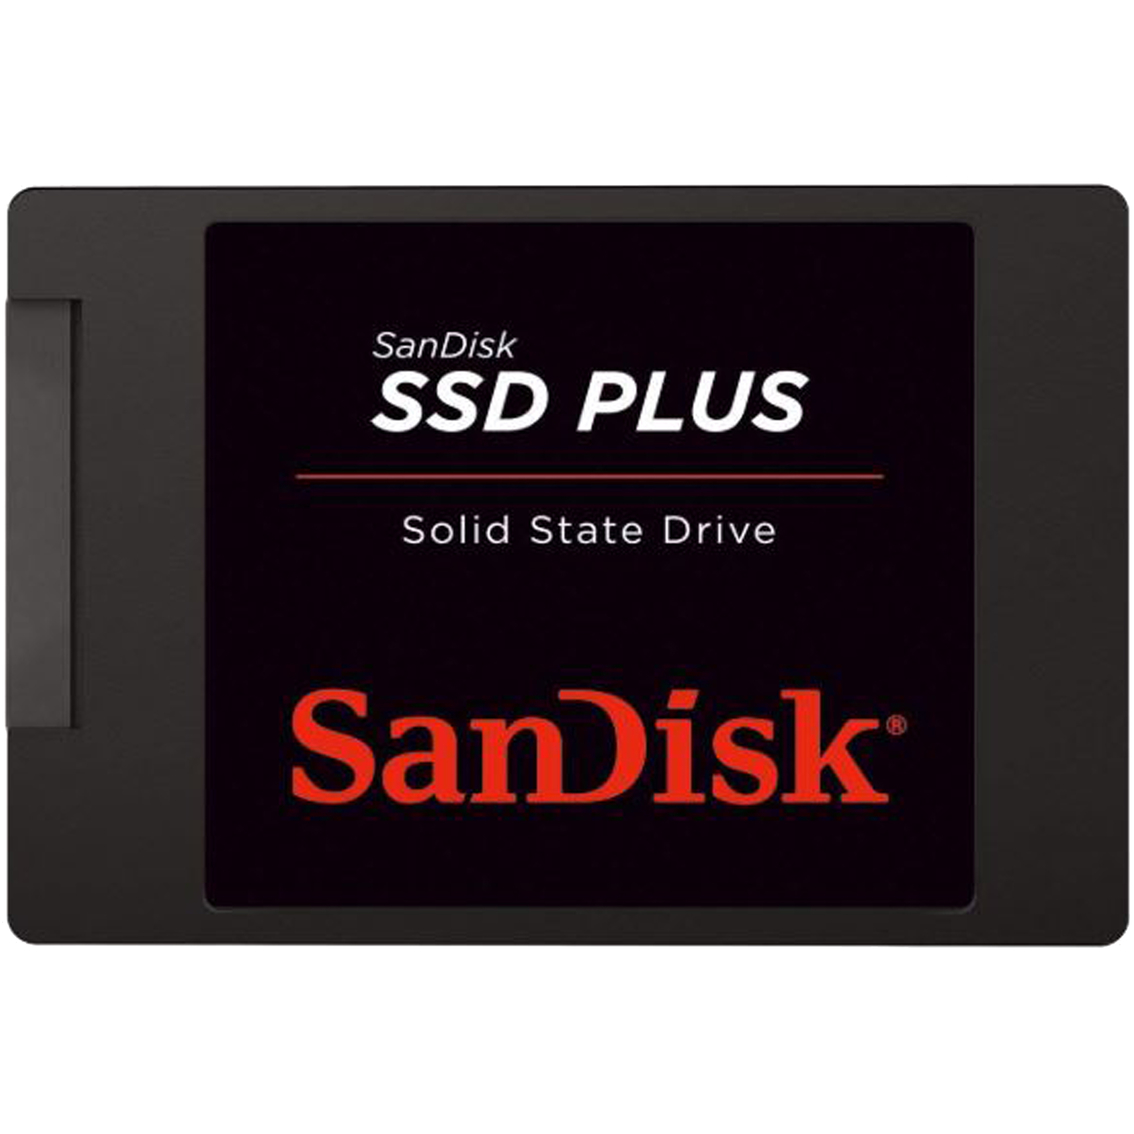 SanDisk SSD Plus 480GB Internal SSD - Image 2 of 3